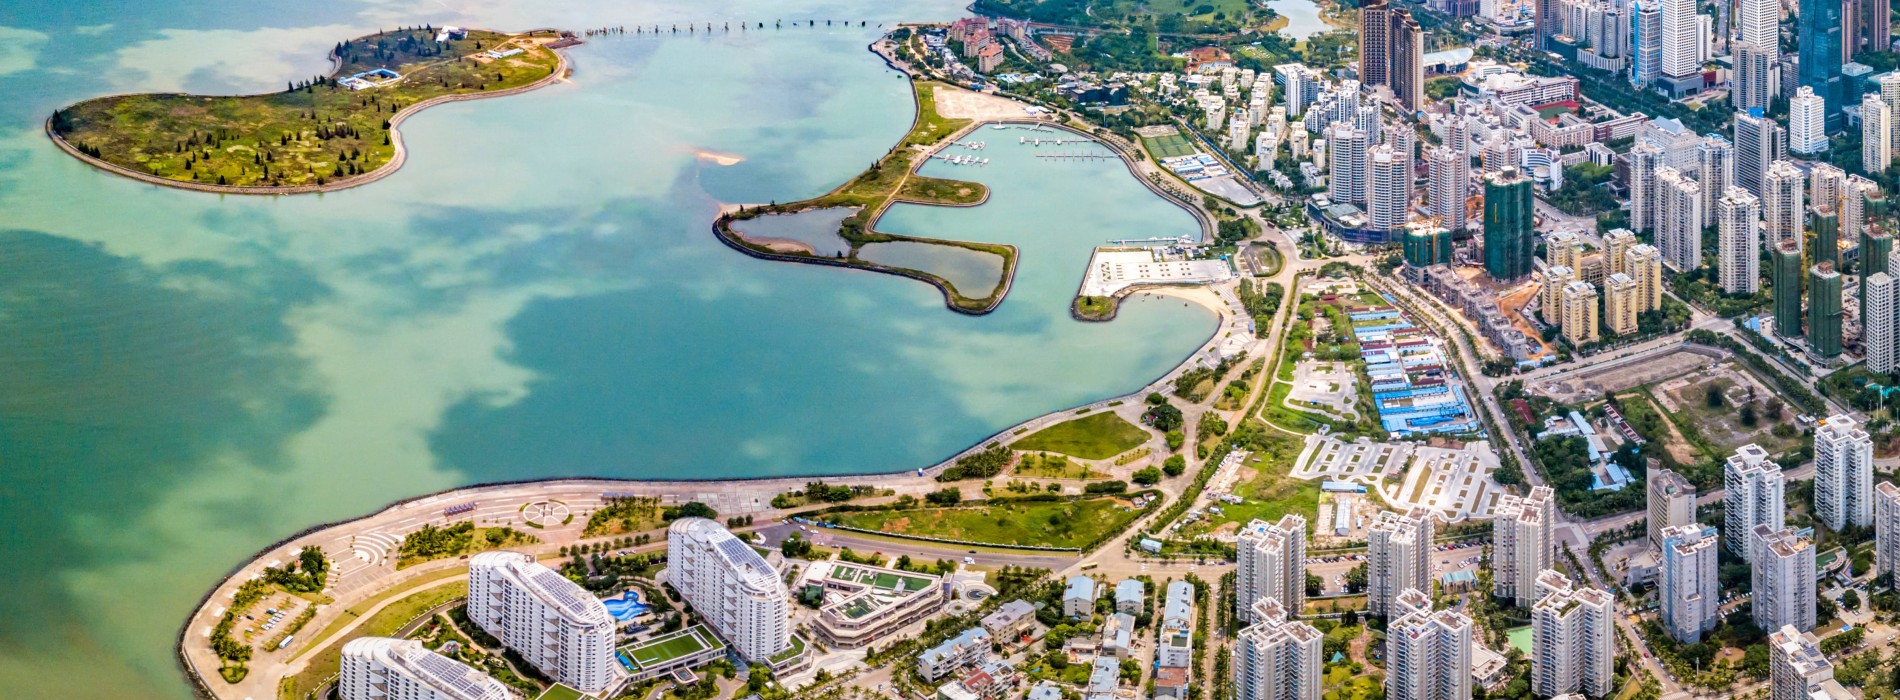 Radisson Blu to launch property on Hainan Island